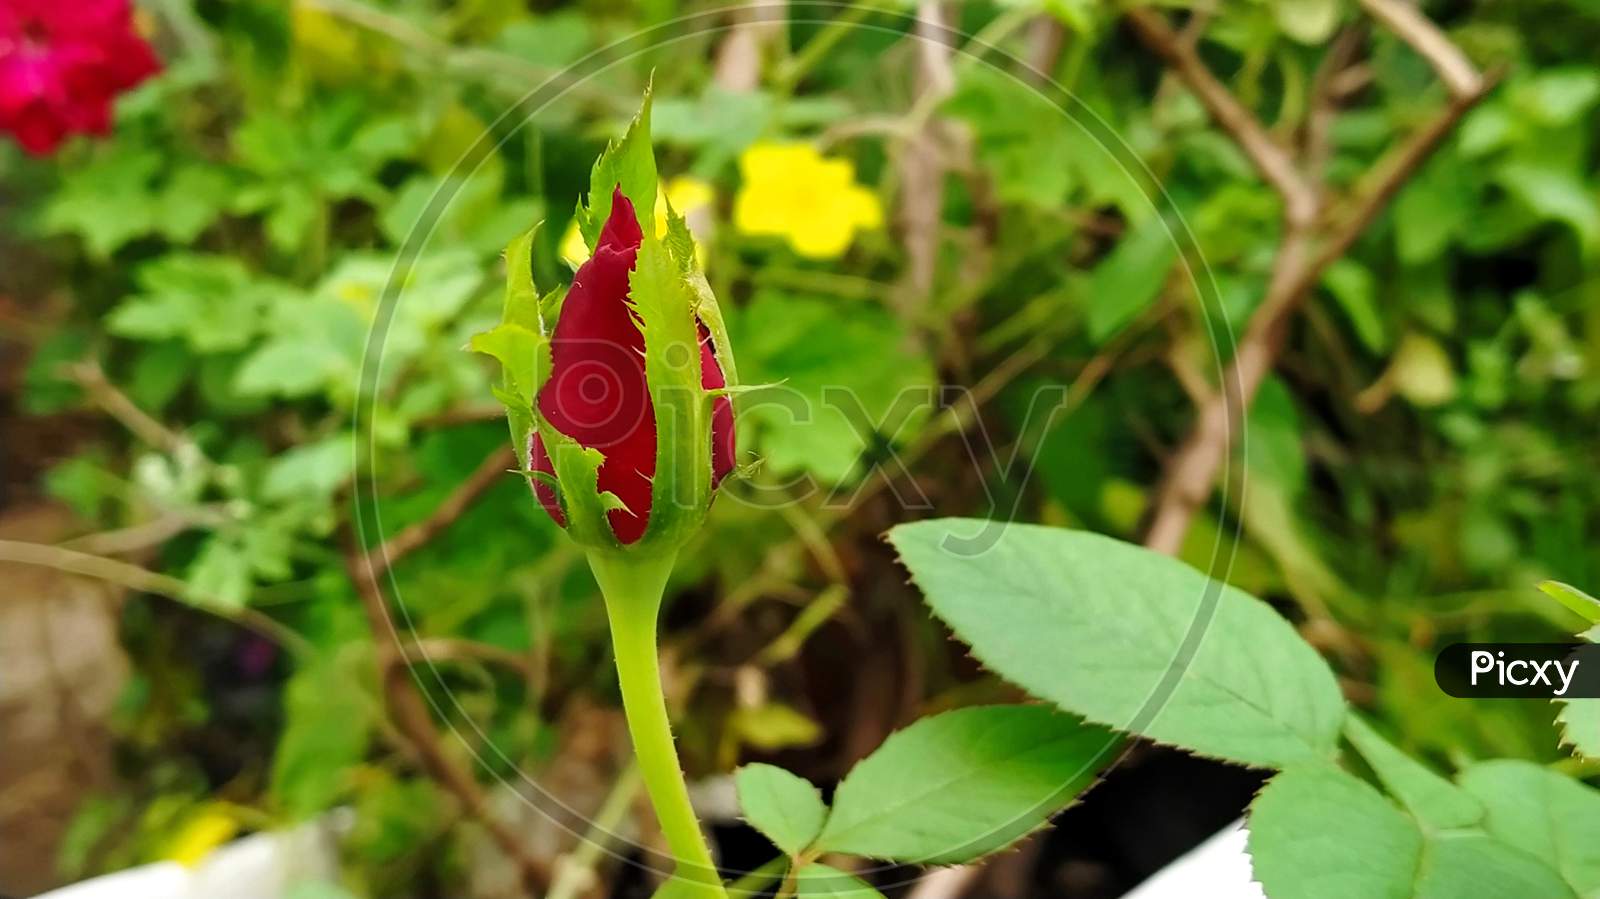 Red rose bud